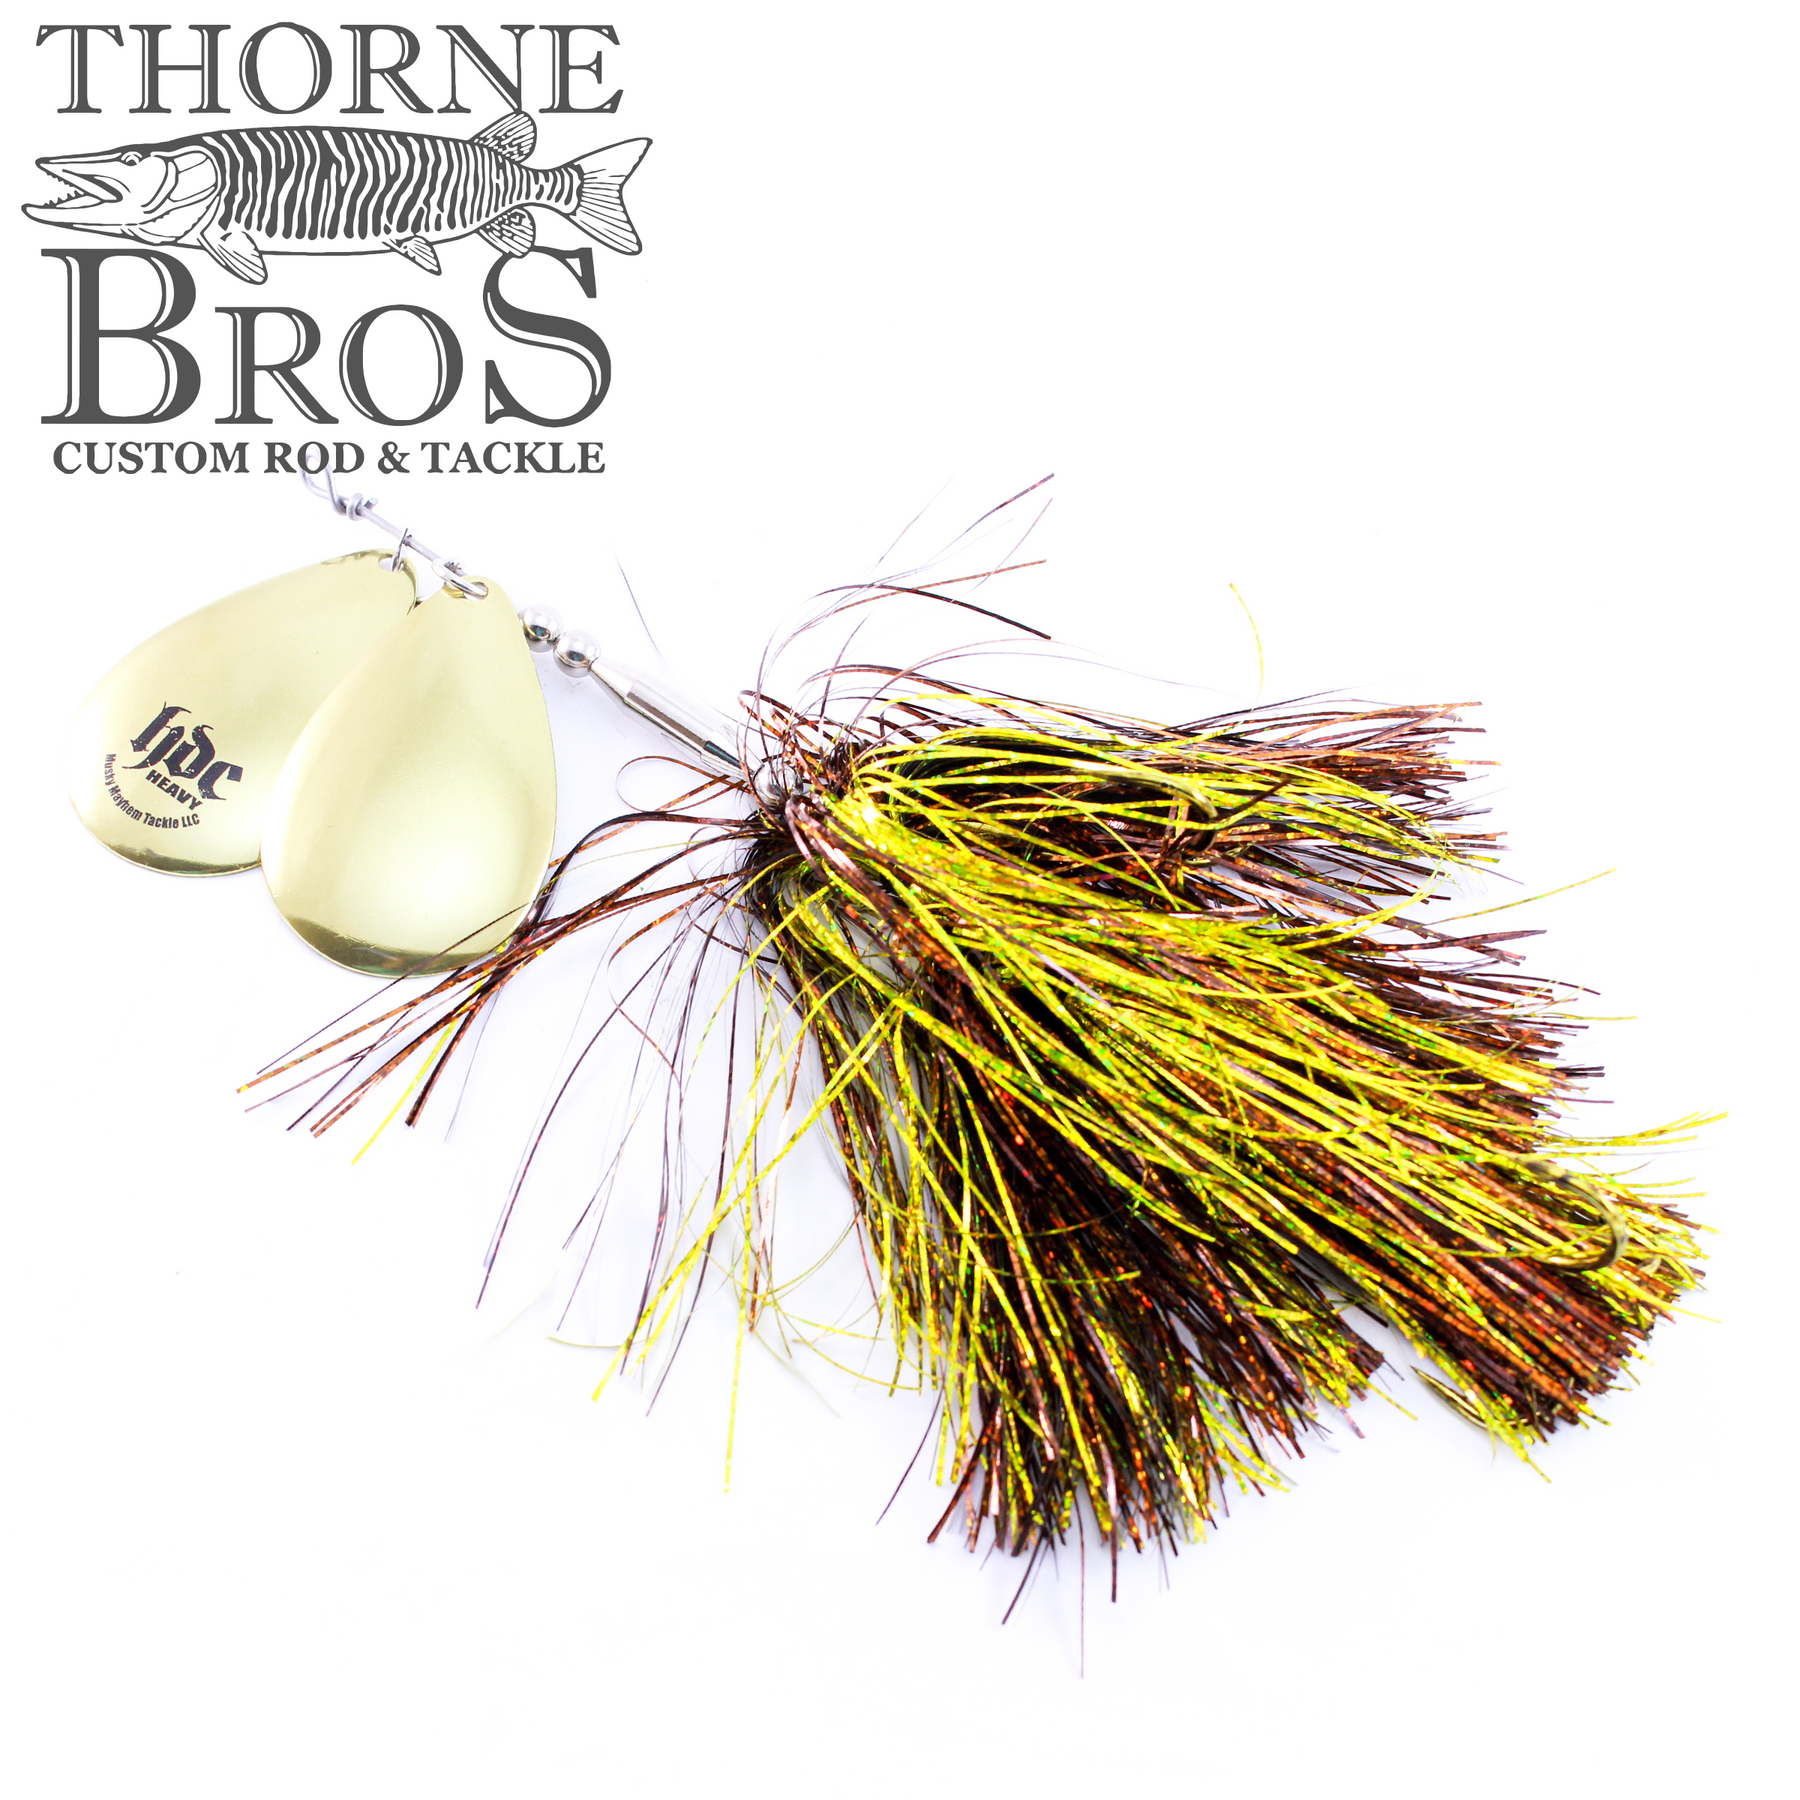 Thorne Bros. Custom Predator Musky Rods